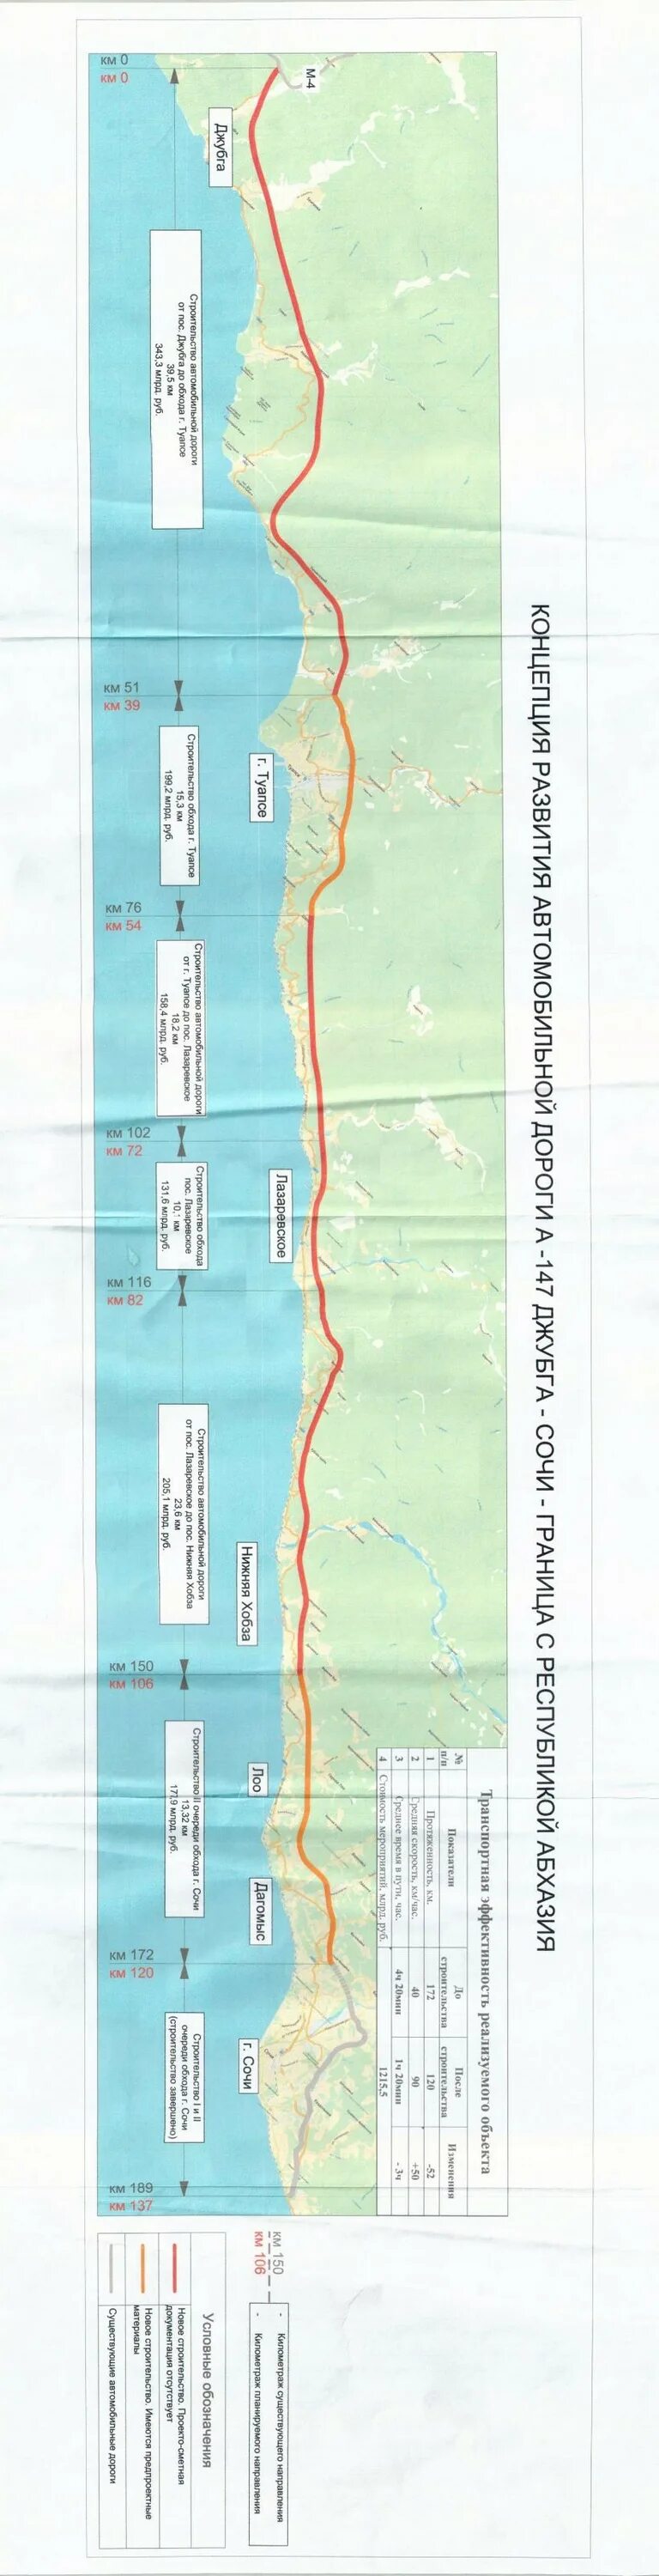 А-147 Джубга-Сочи. Концепция развития автомобильной дороги Джубга Сочи. Проект новой дороги Джубга Сочи. Проект автодороги Джубга Сочи на карте.